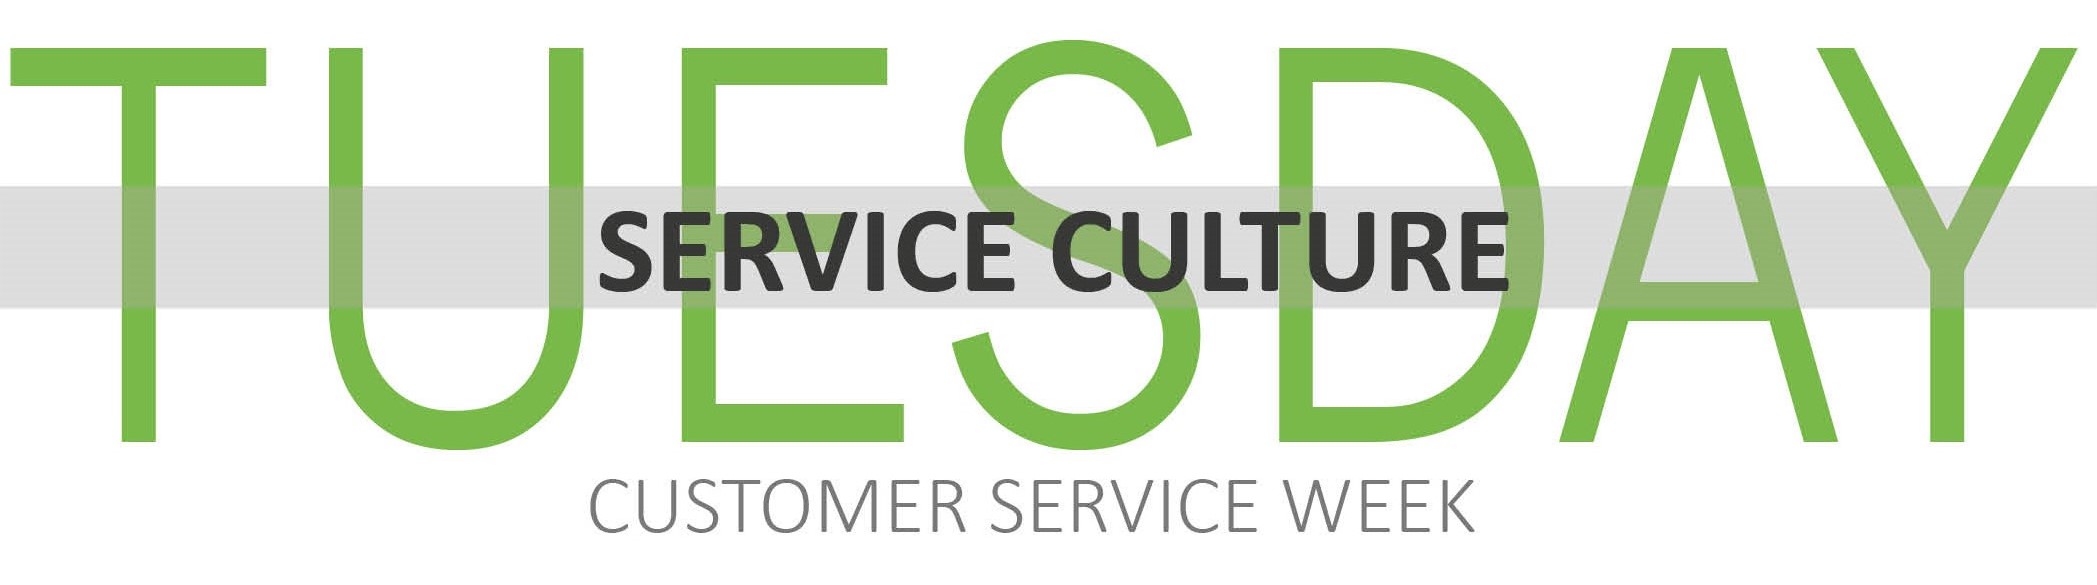 Customer Service Week - Tuesday